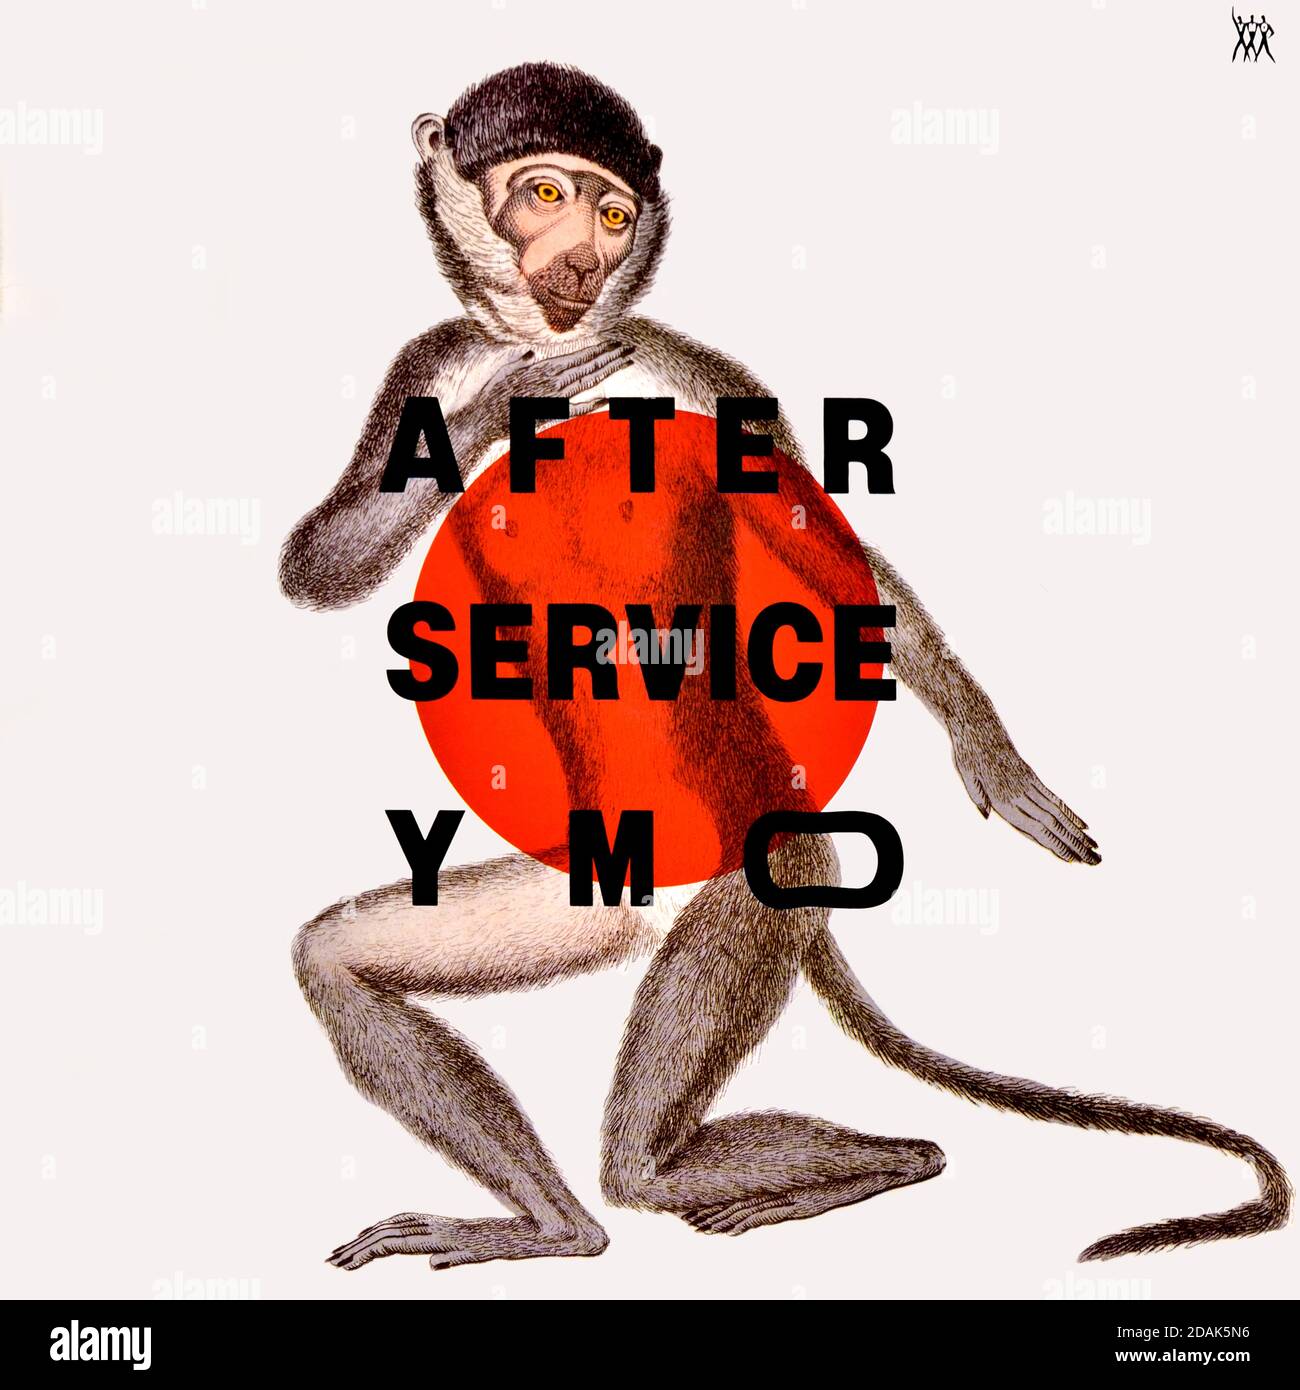 YMO - original vinyl album cover - After Service - 1984 Stock Photo